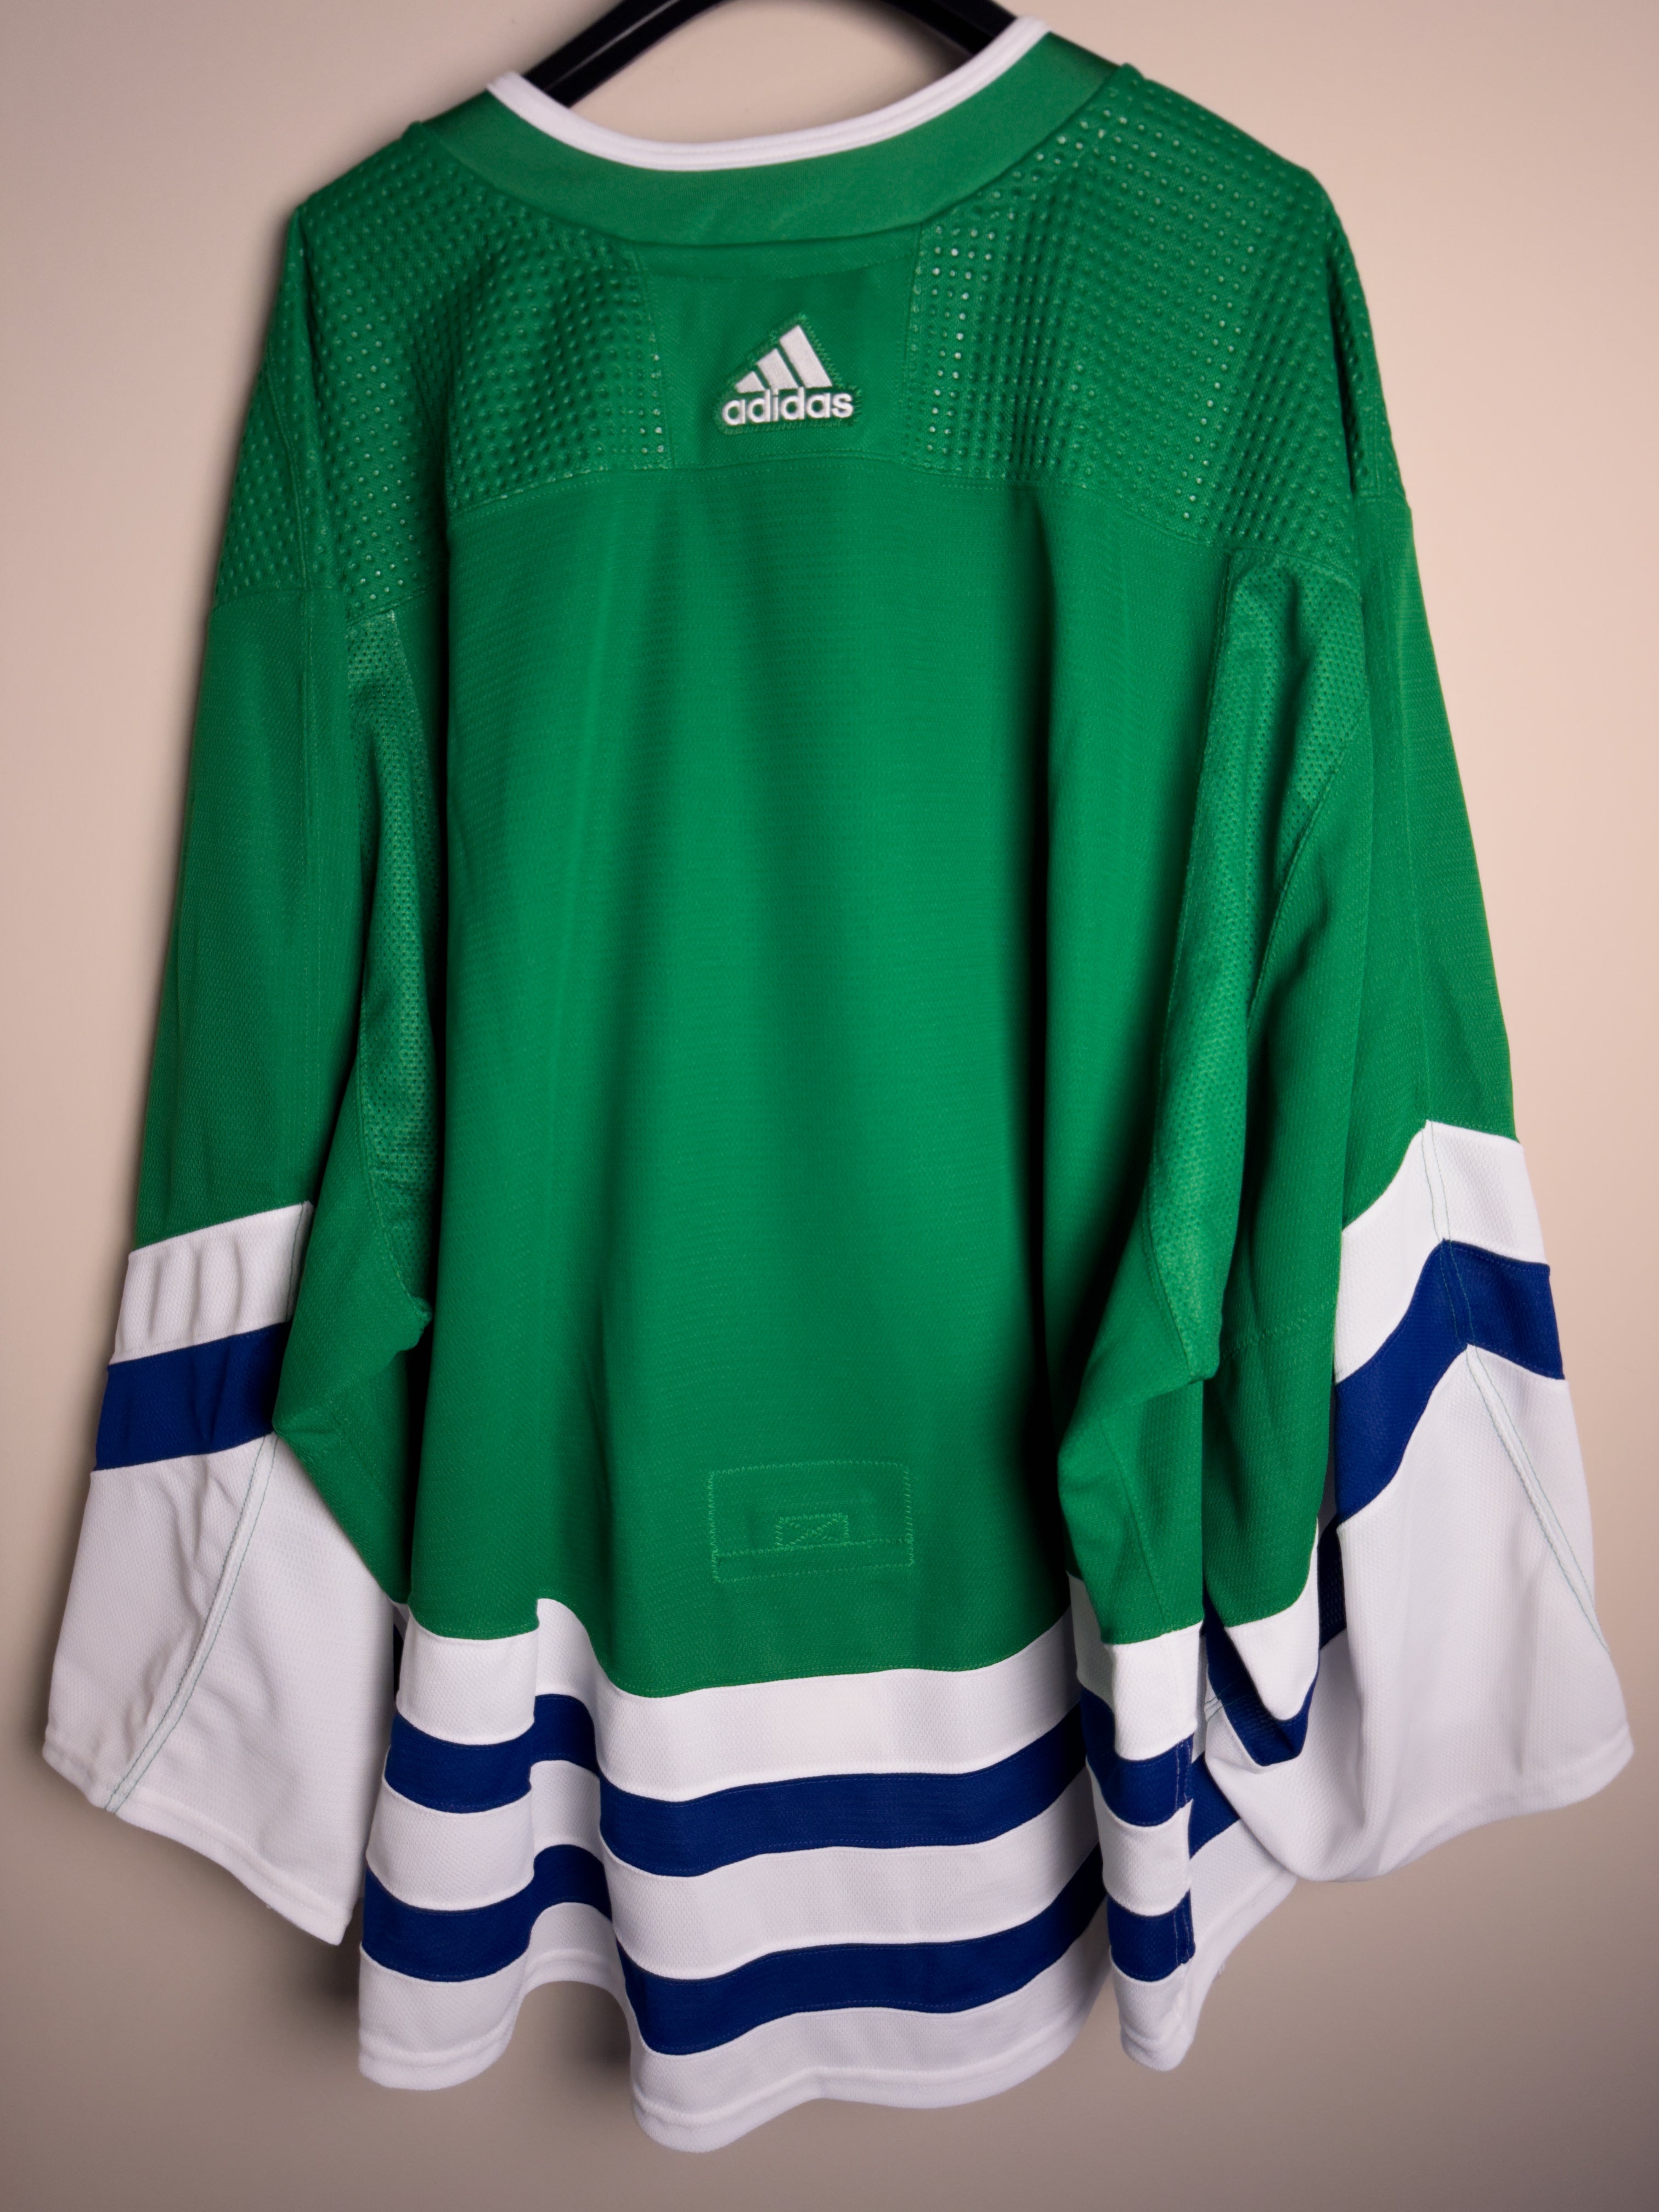 Carolina Hurricanes NHL Adidas MiC Team Issued Reverse Retro Whalers Home Jersey Size 60G (Goalie Cut)